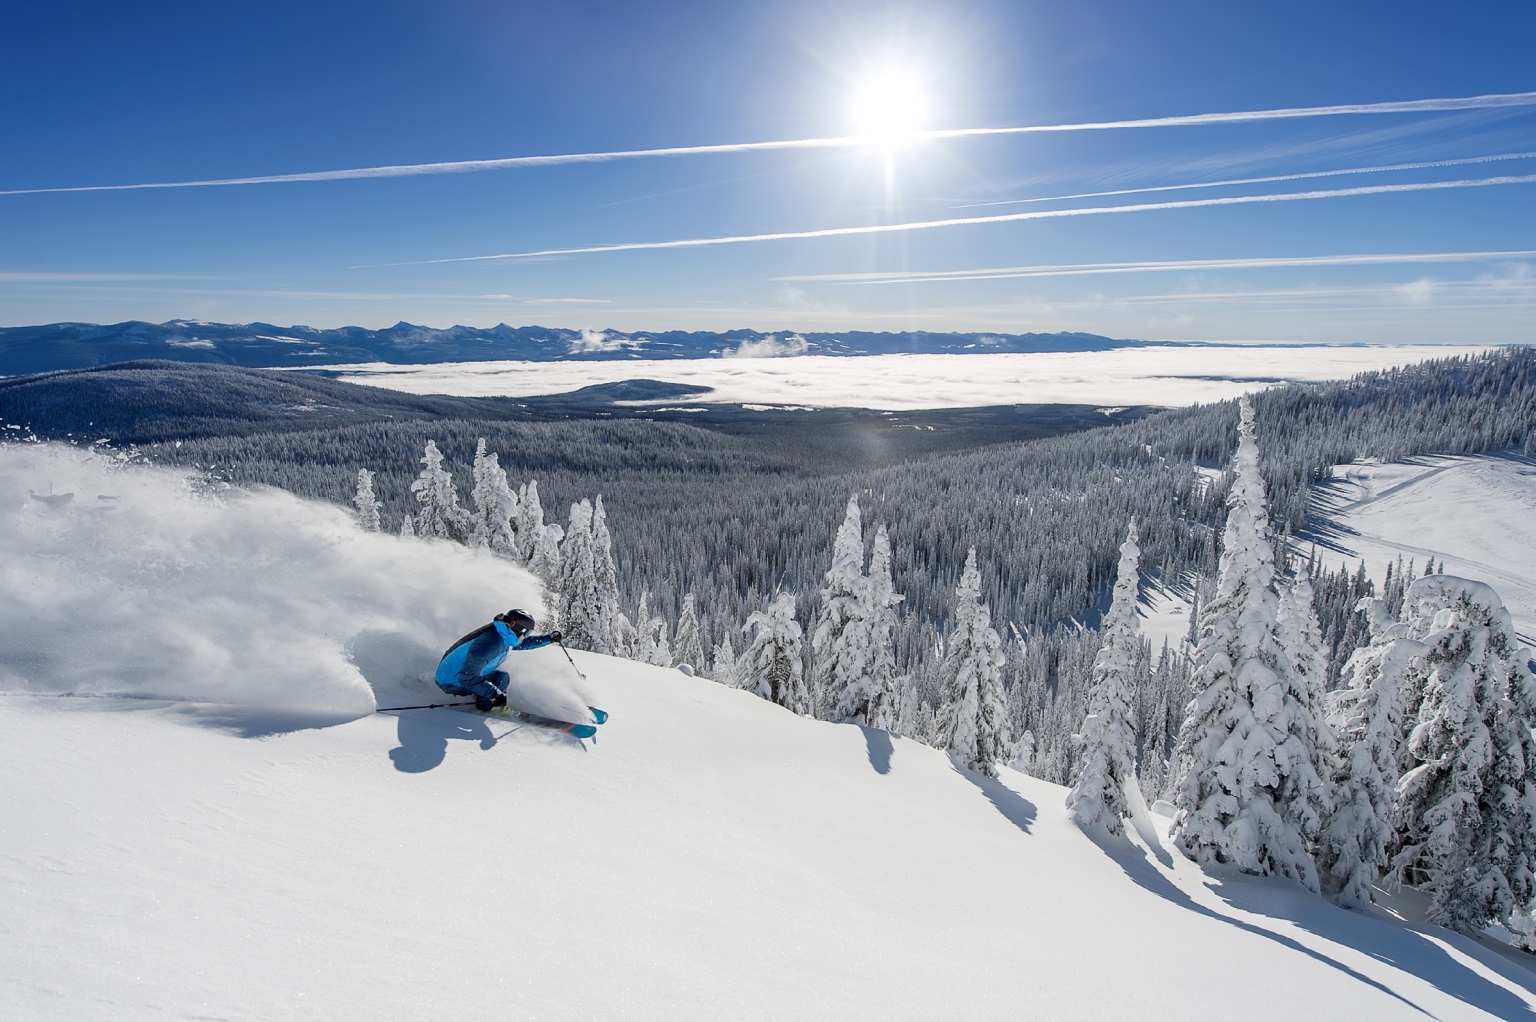 A skier takes large, sweeping powder turns on a bluebird day at Big White Ski Resort.